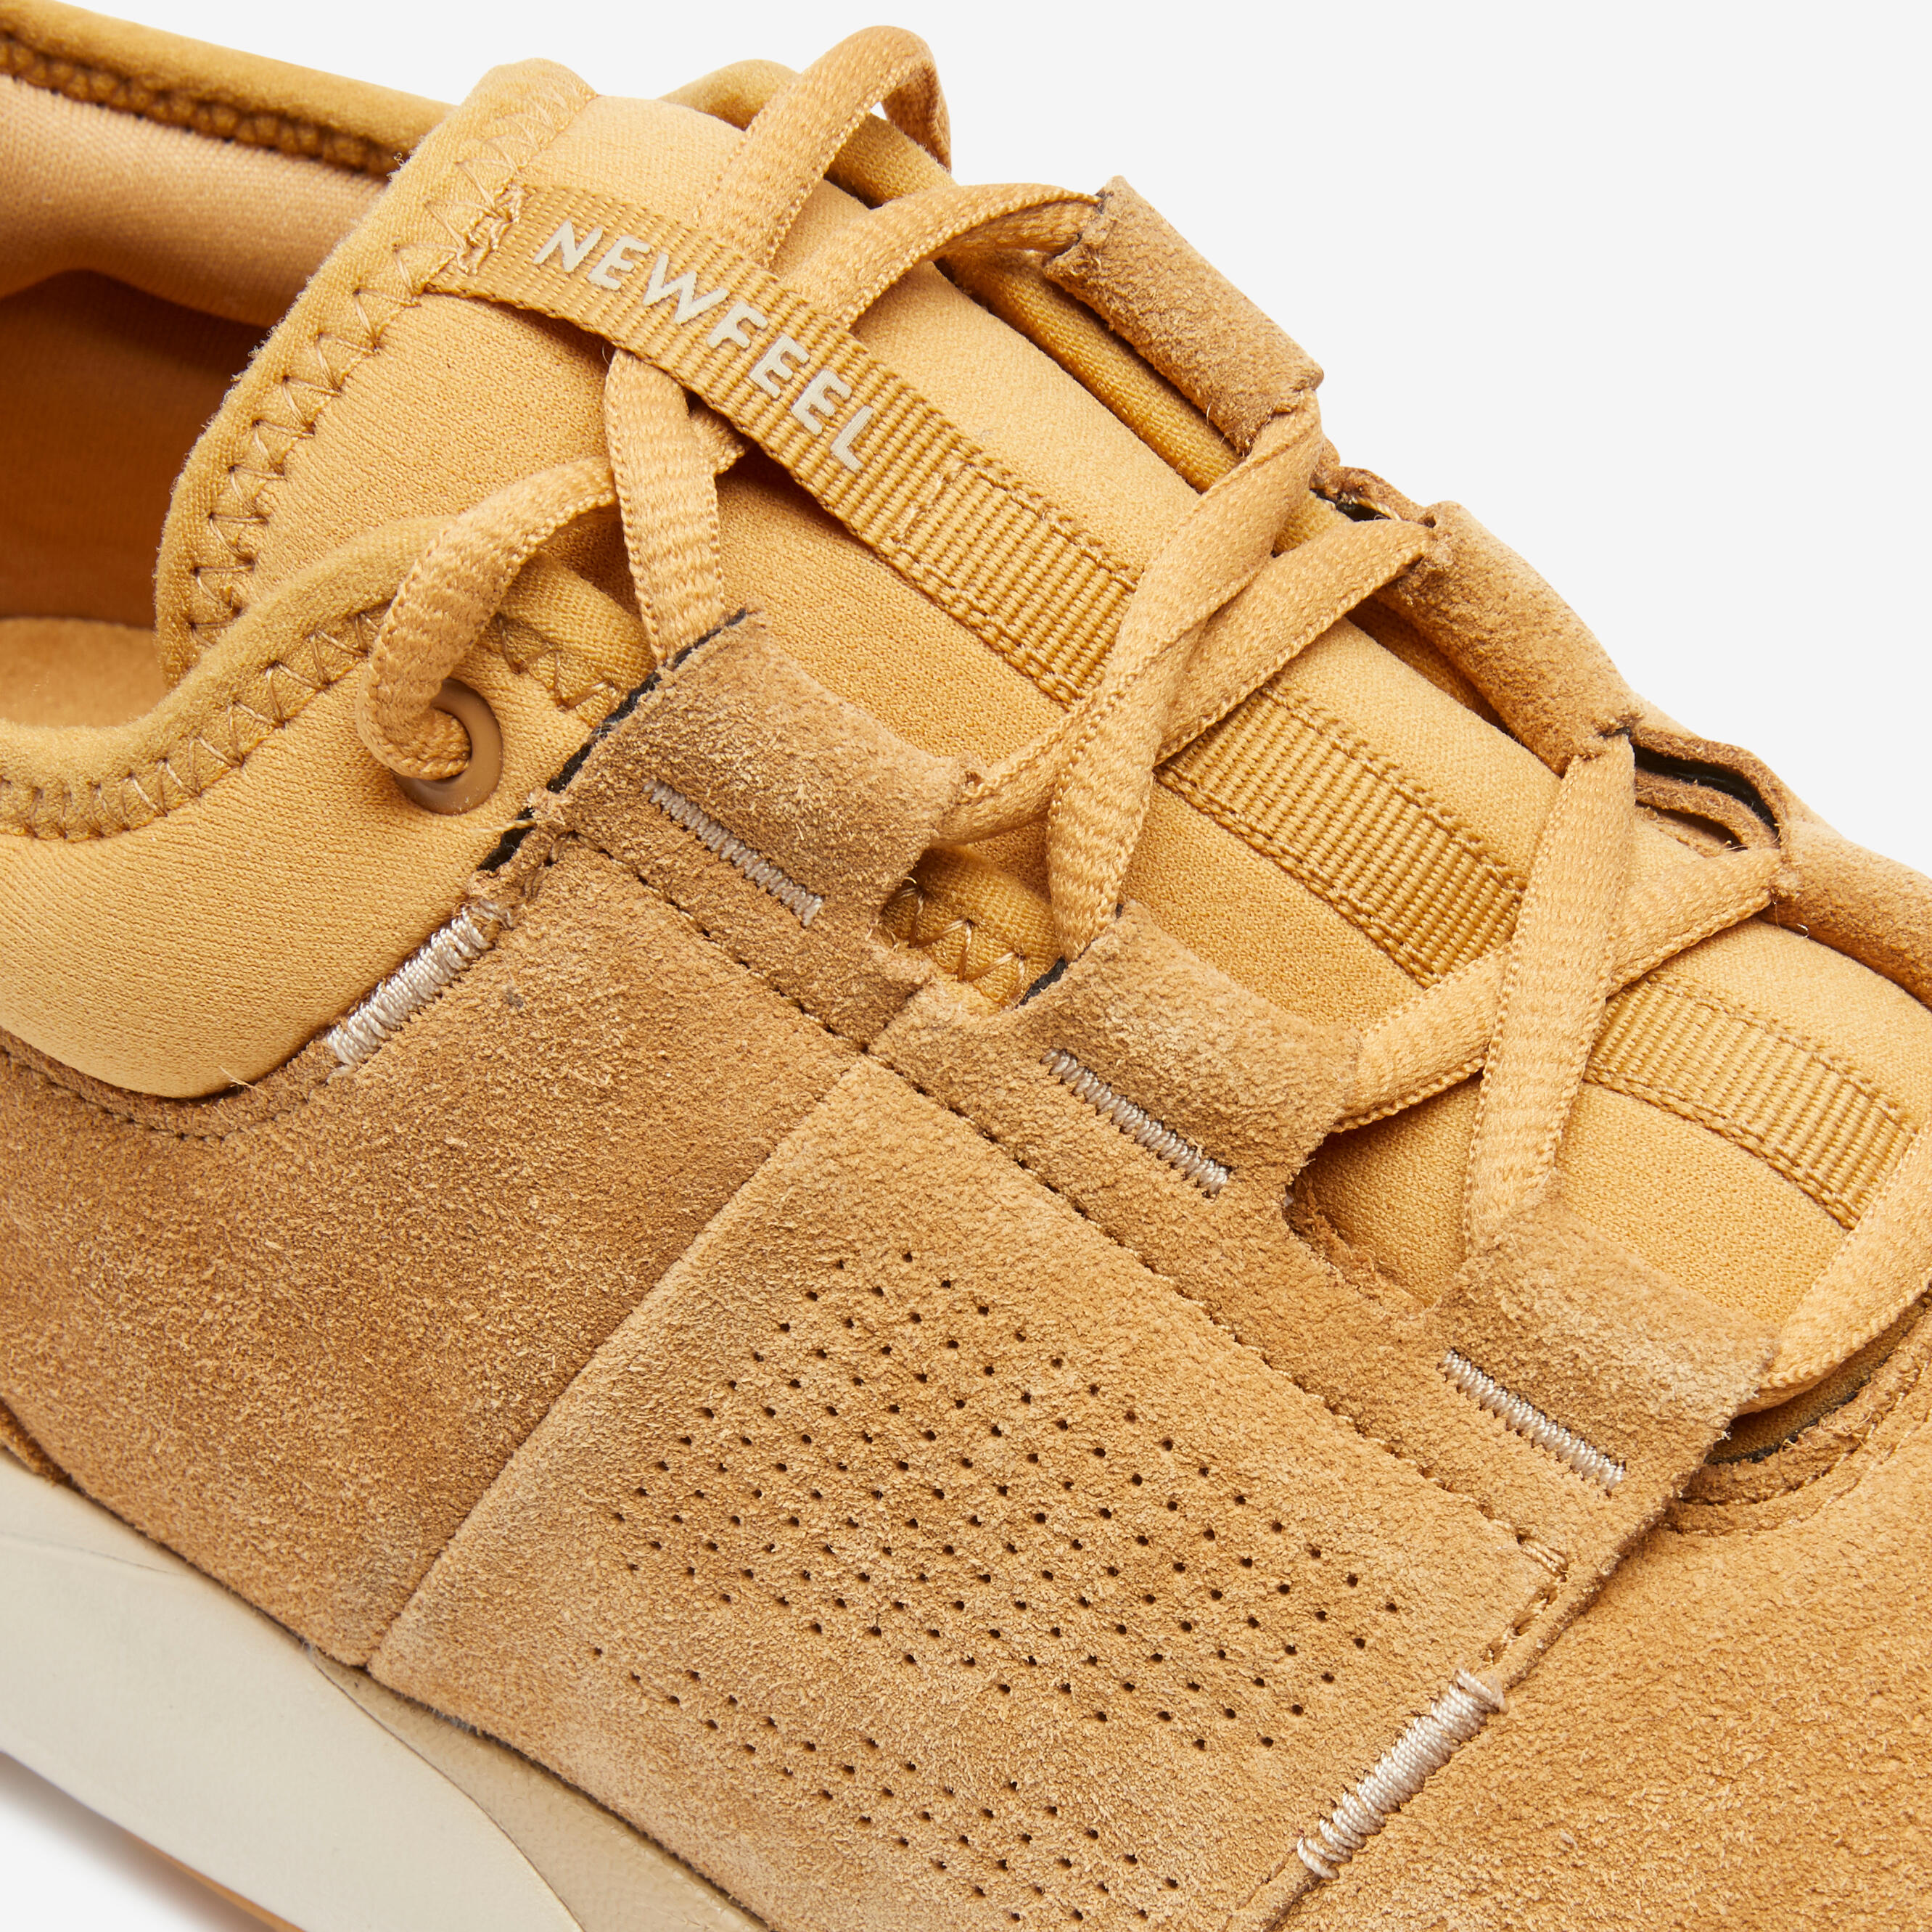 Actiwalk Comfort Leather Men's Urban Walking Shoes - Camel 12/43